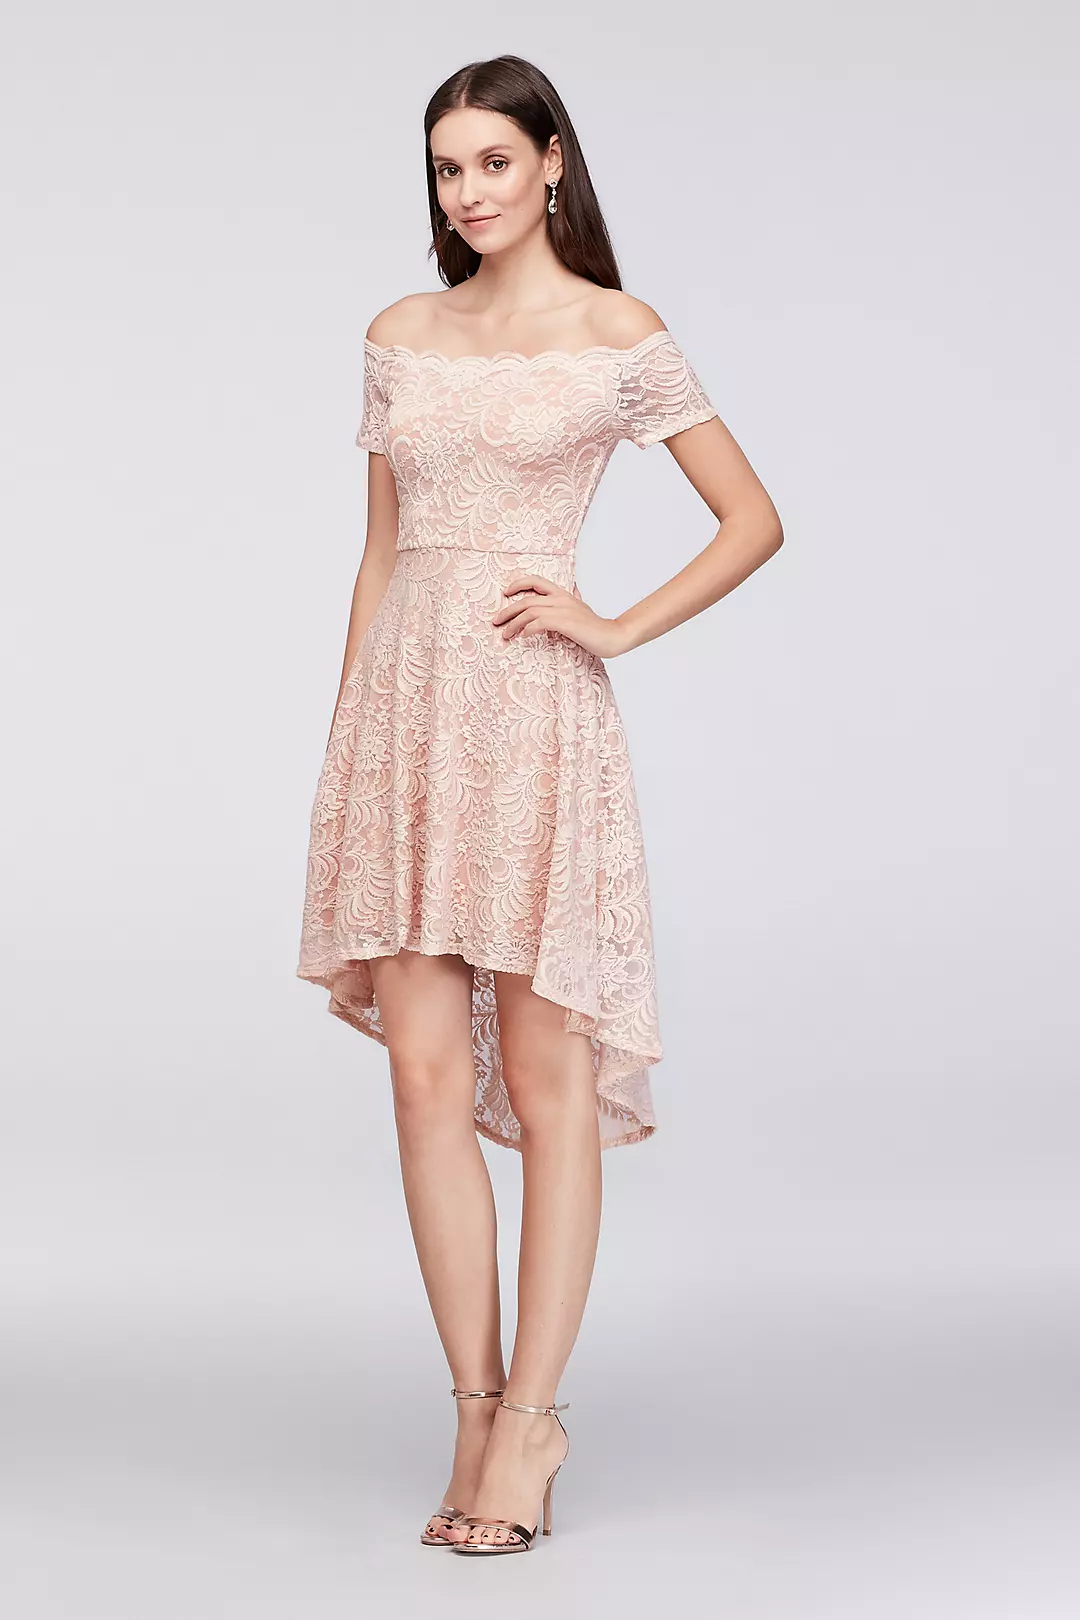 Off-the-Shoulder Lace High-Low Plus Size Dress Image